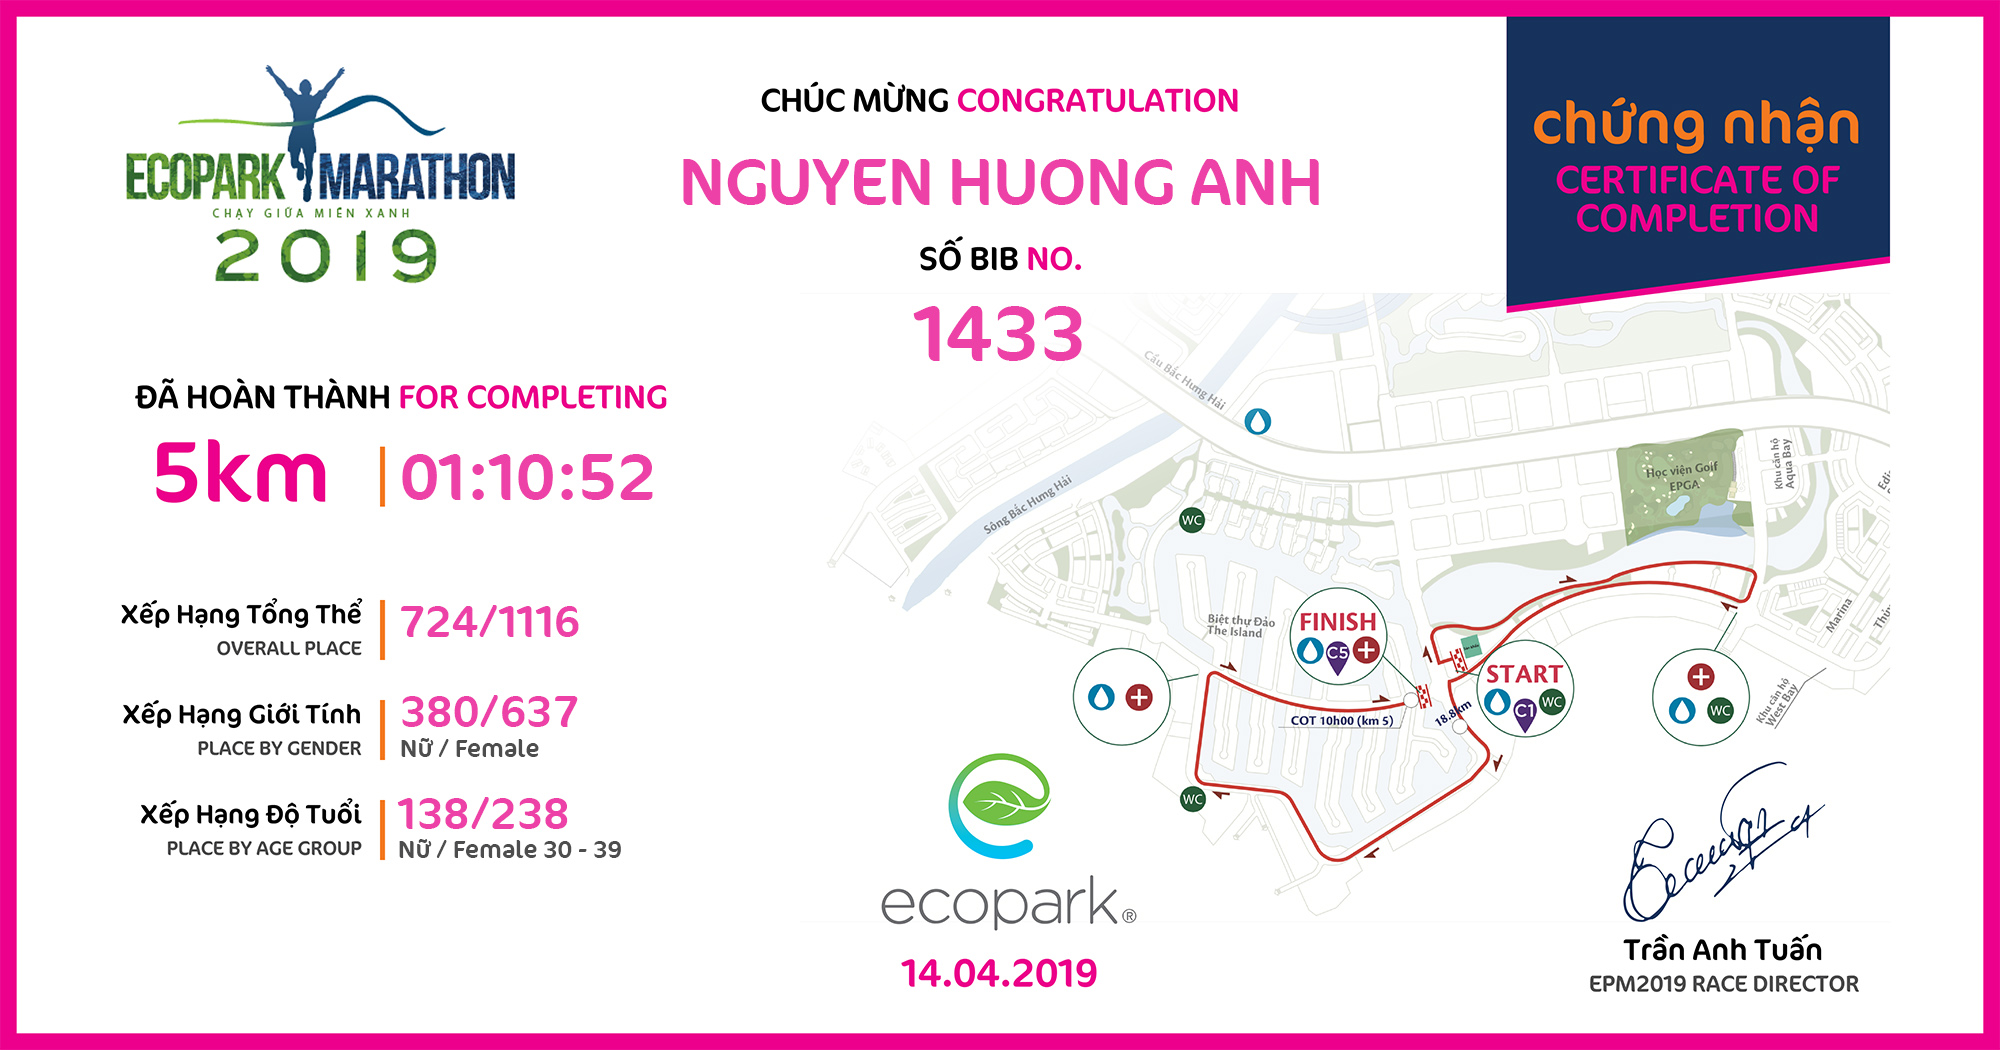 1433 - Nguyen Huong Anh